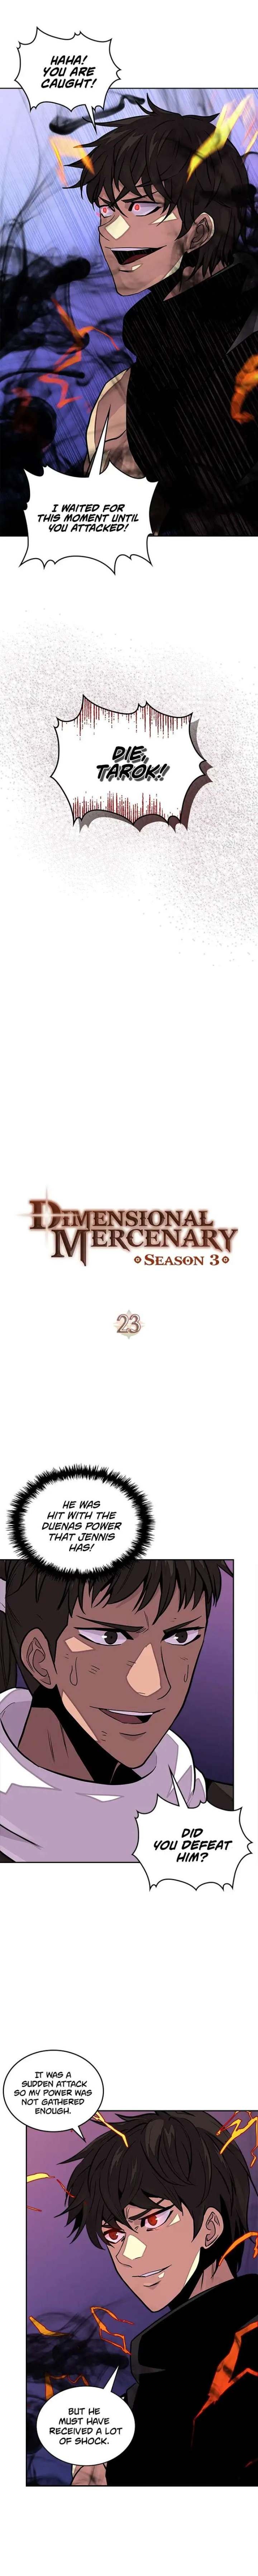 dimensional-mercenary-chap-87-1